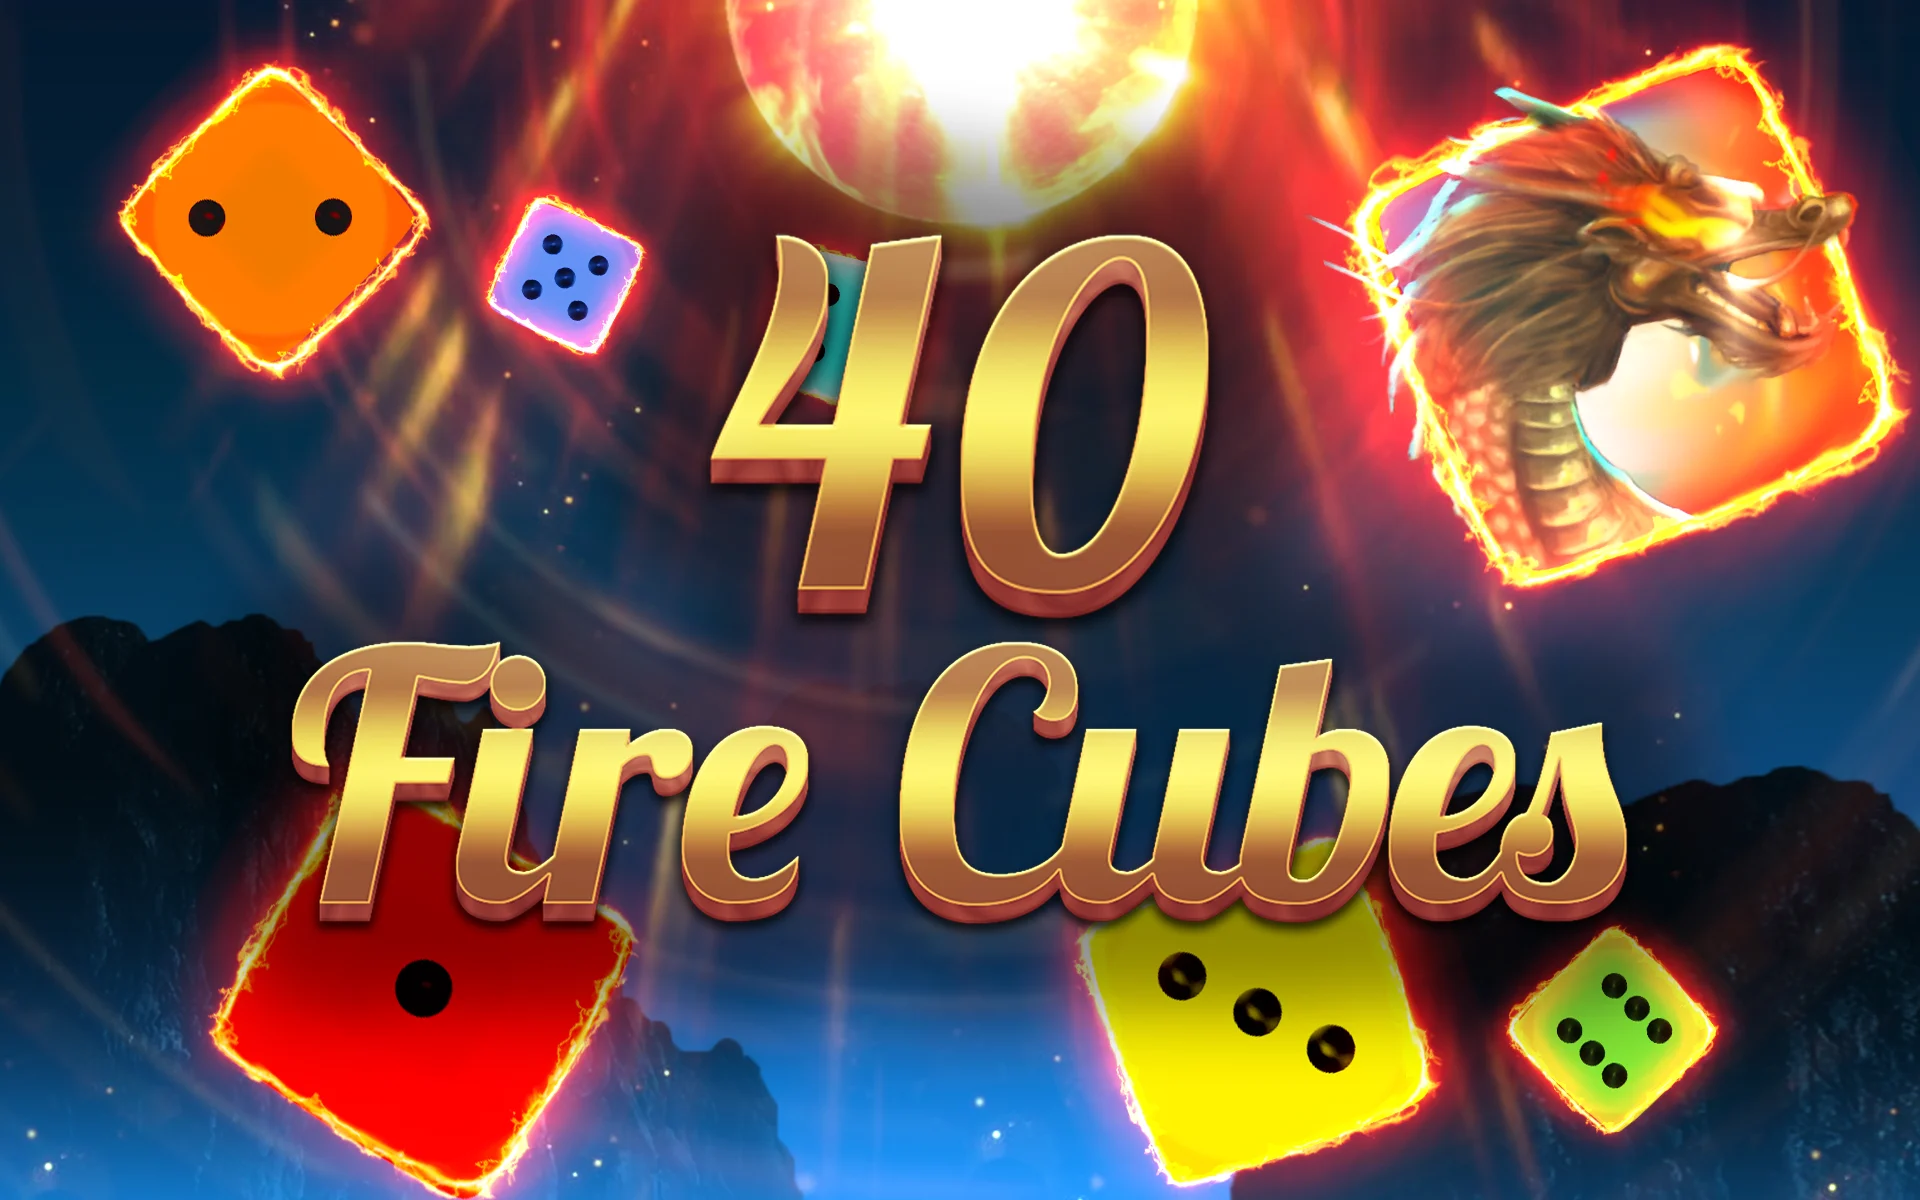 Starcasino.be online casino üzerinden 40 Fire Cubes oynayın